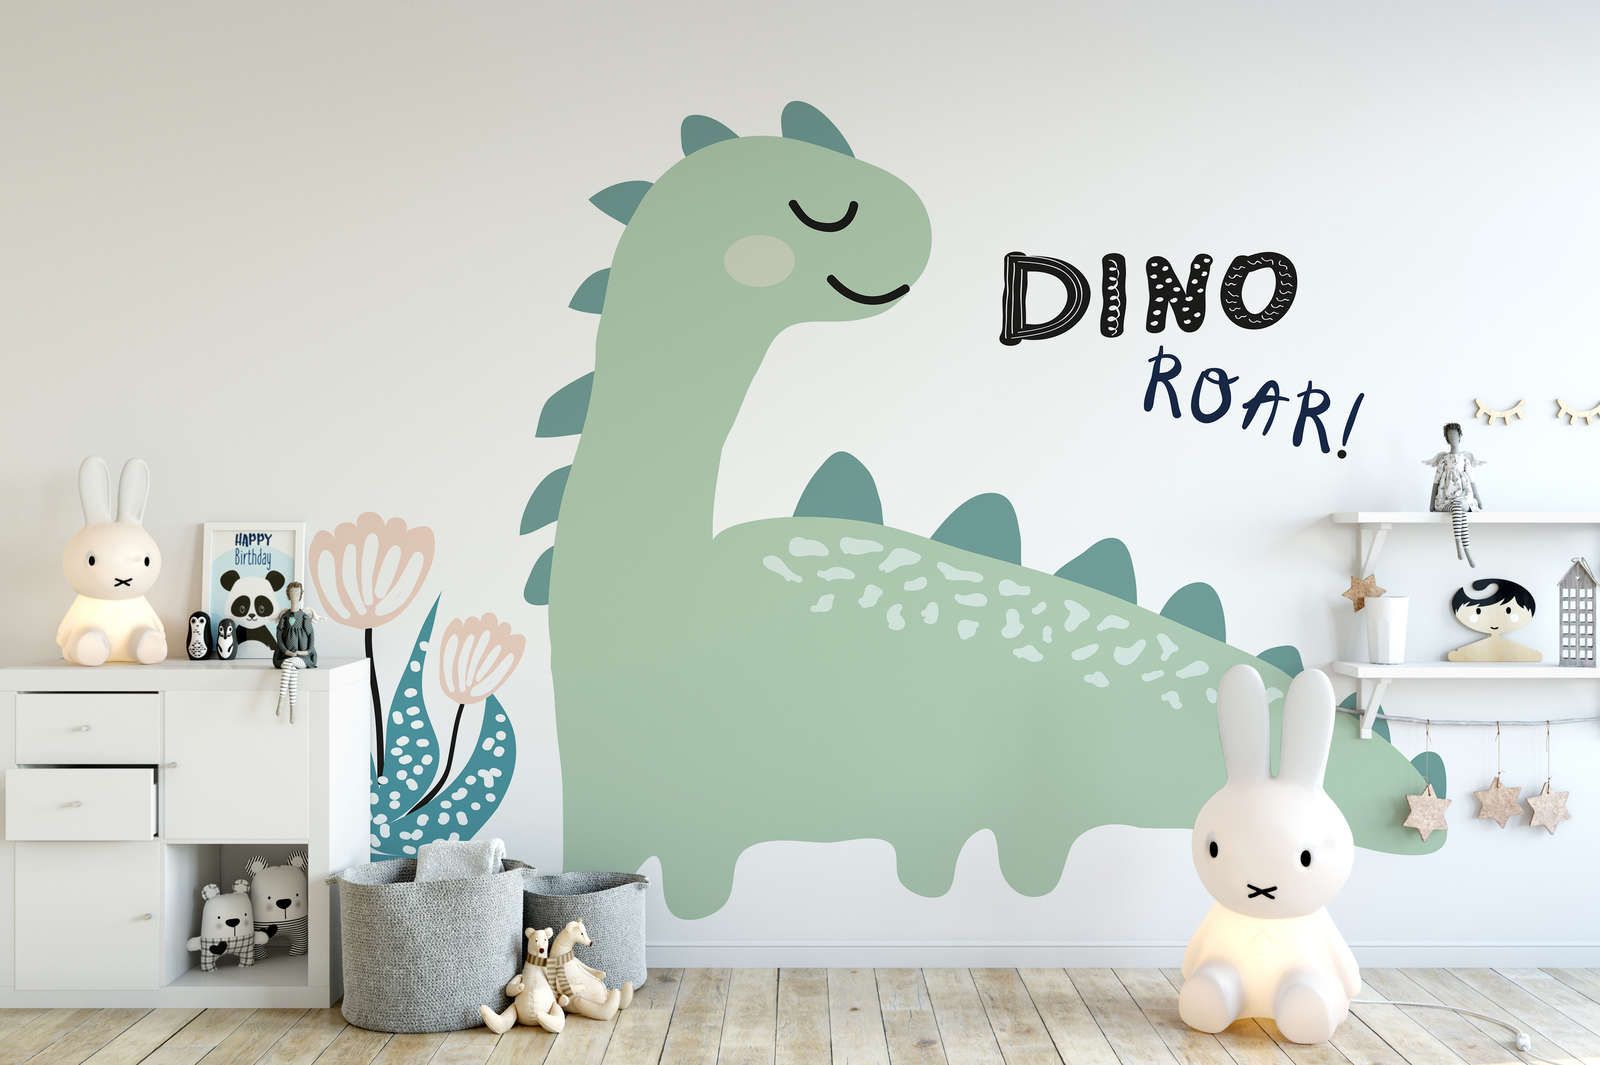             Painted Dinosaur Wallpaper - Smooth & Matte Non-woven
        